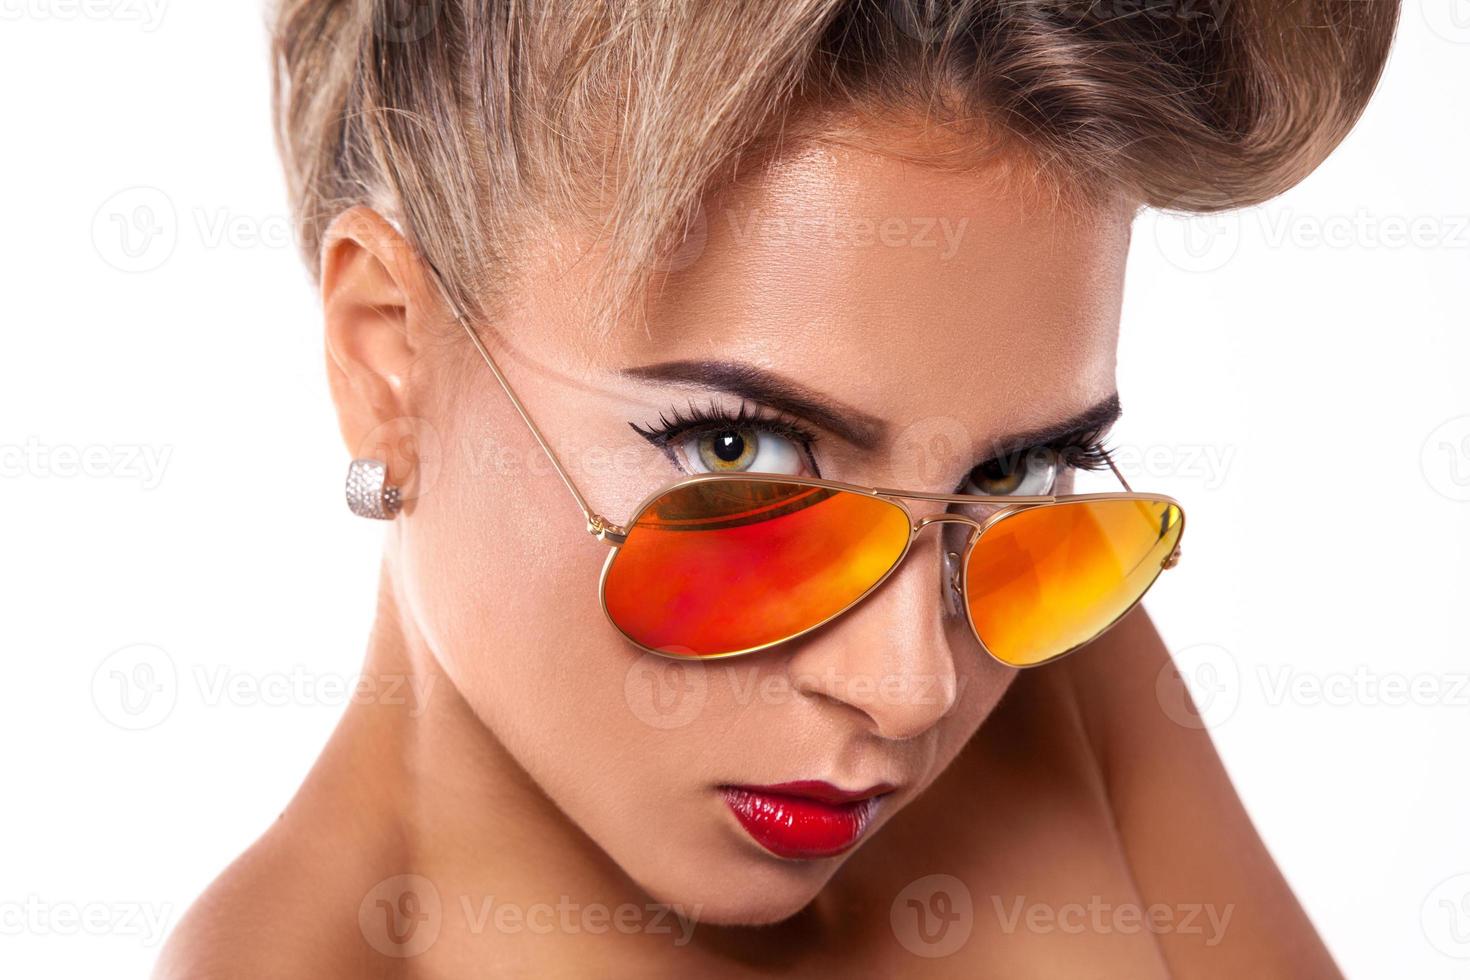 linda mulher em óculos de sol no estúdio foto